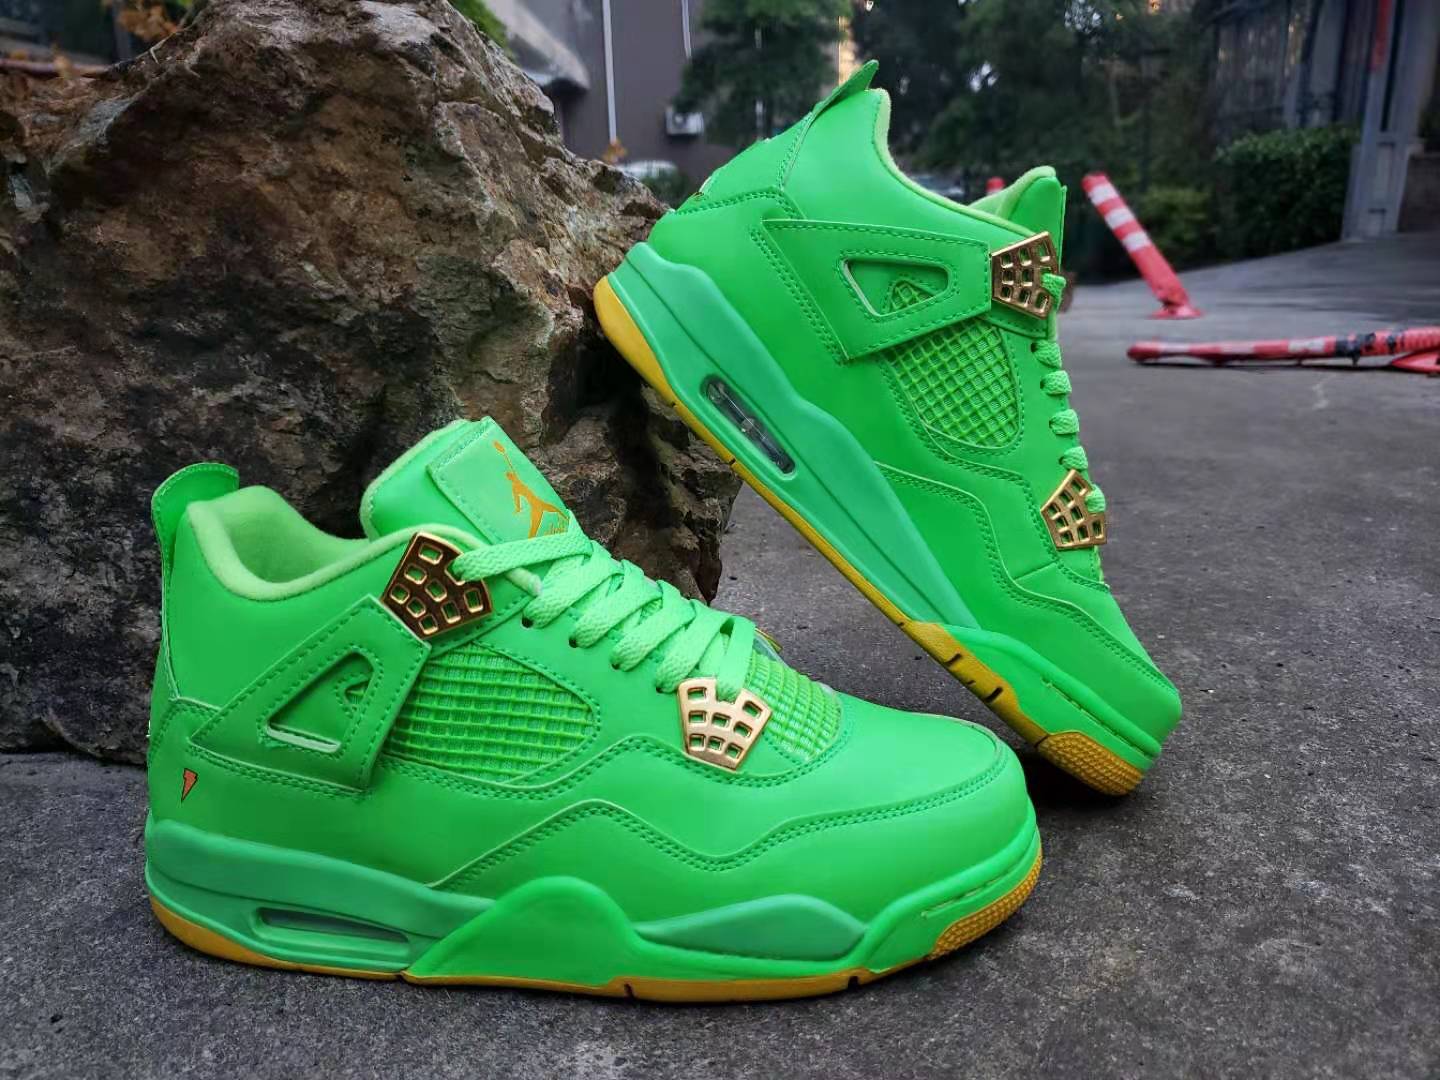 green jordan basketball shoes